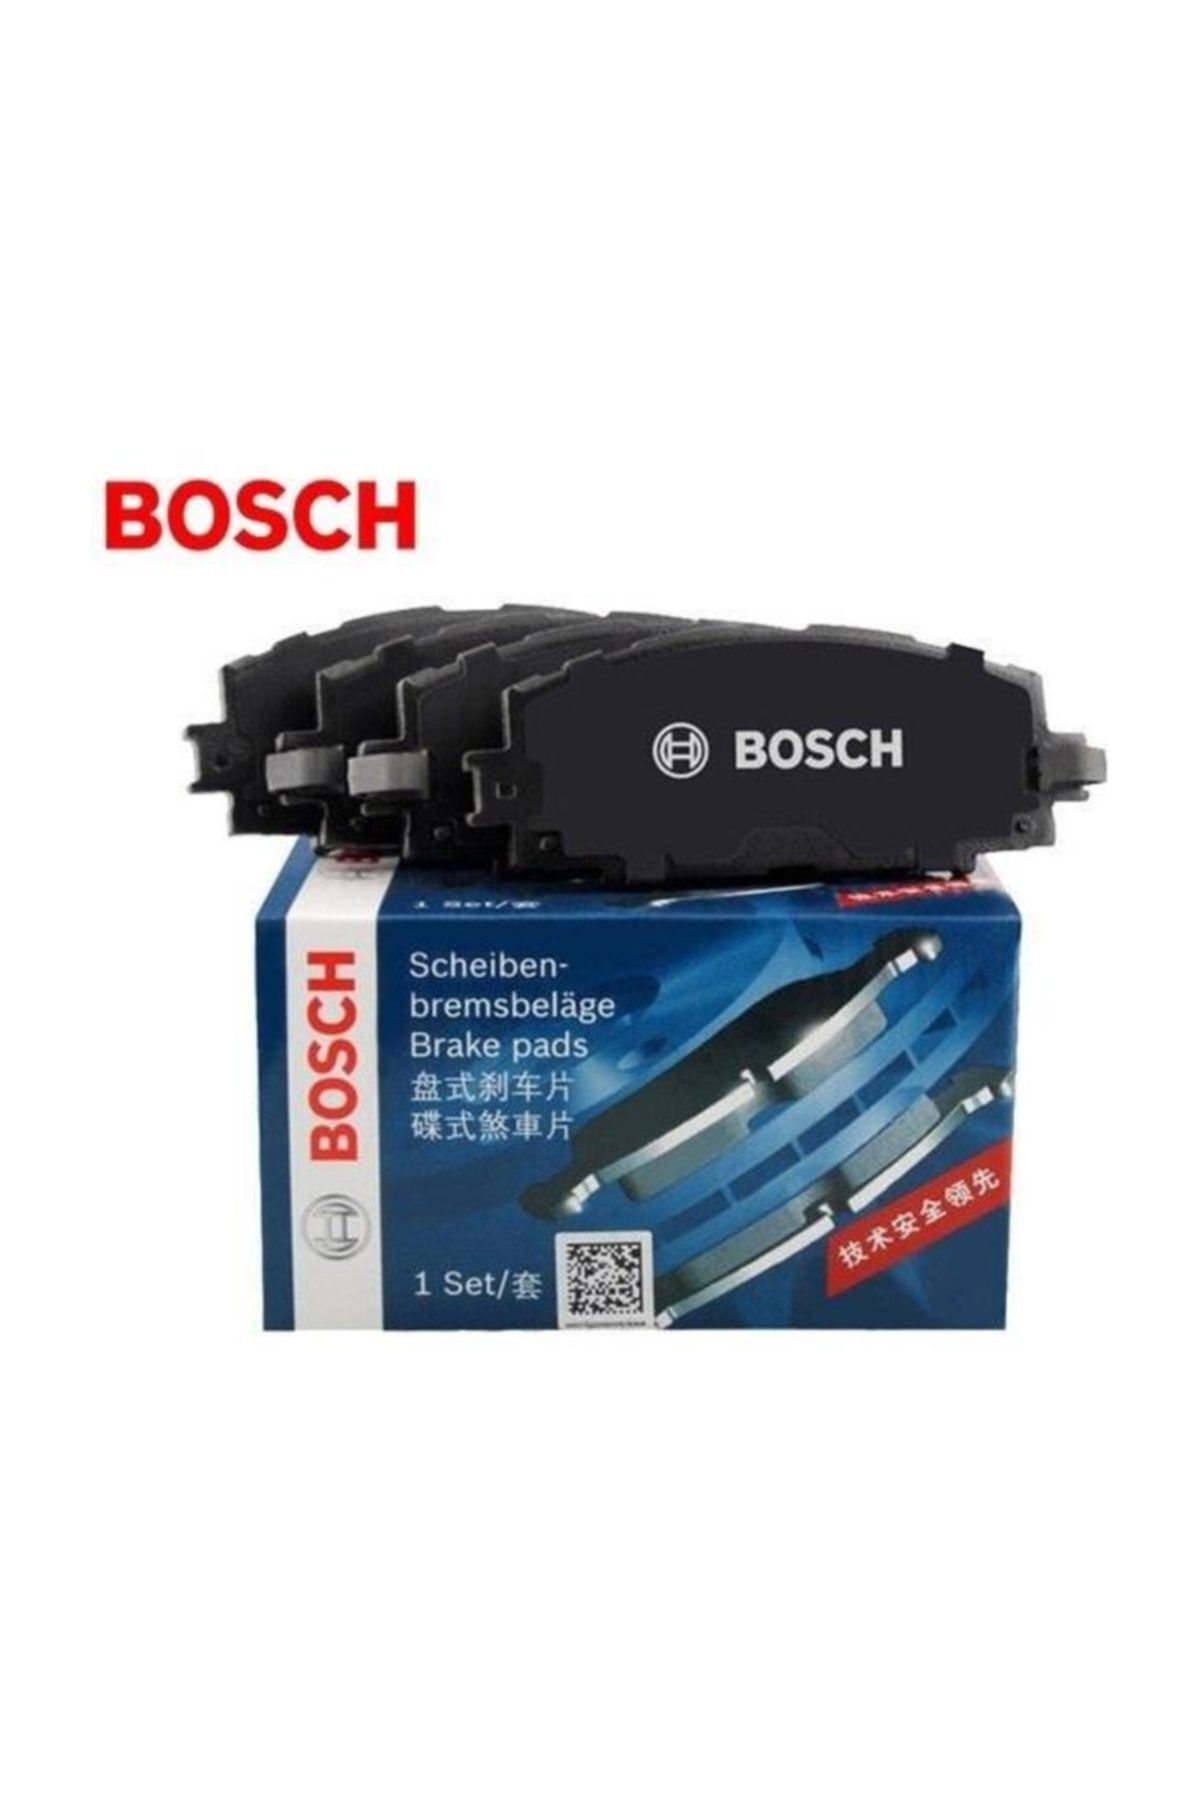 Bosch Doğan Kartal Şahin Serçe Ön Fren Balatası M131 Bosch Marka